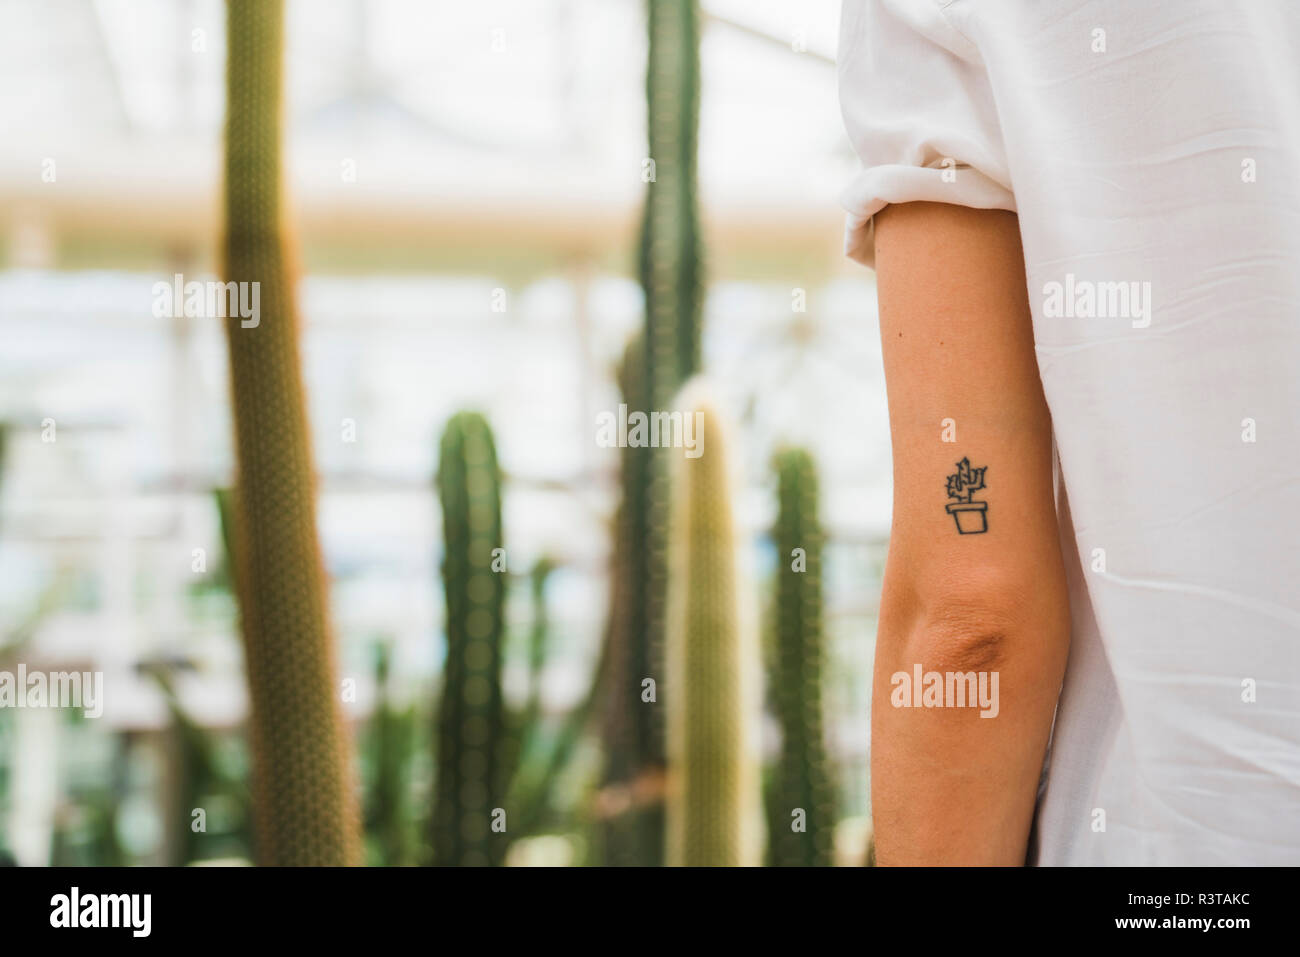 snake 3d tattoo - Buscar con Google  Snake tattoo design, Snake tattoo,  Tattoo work